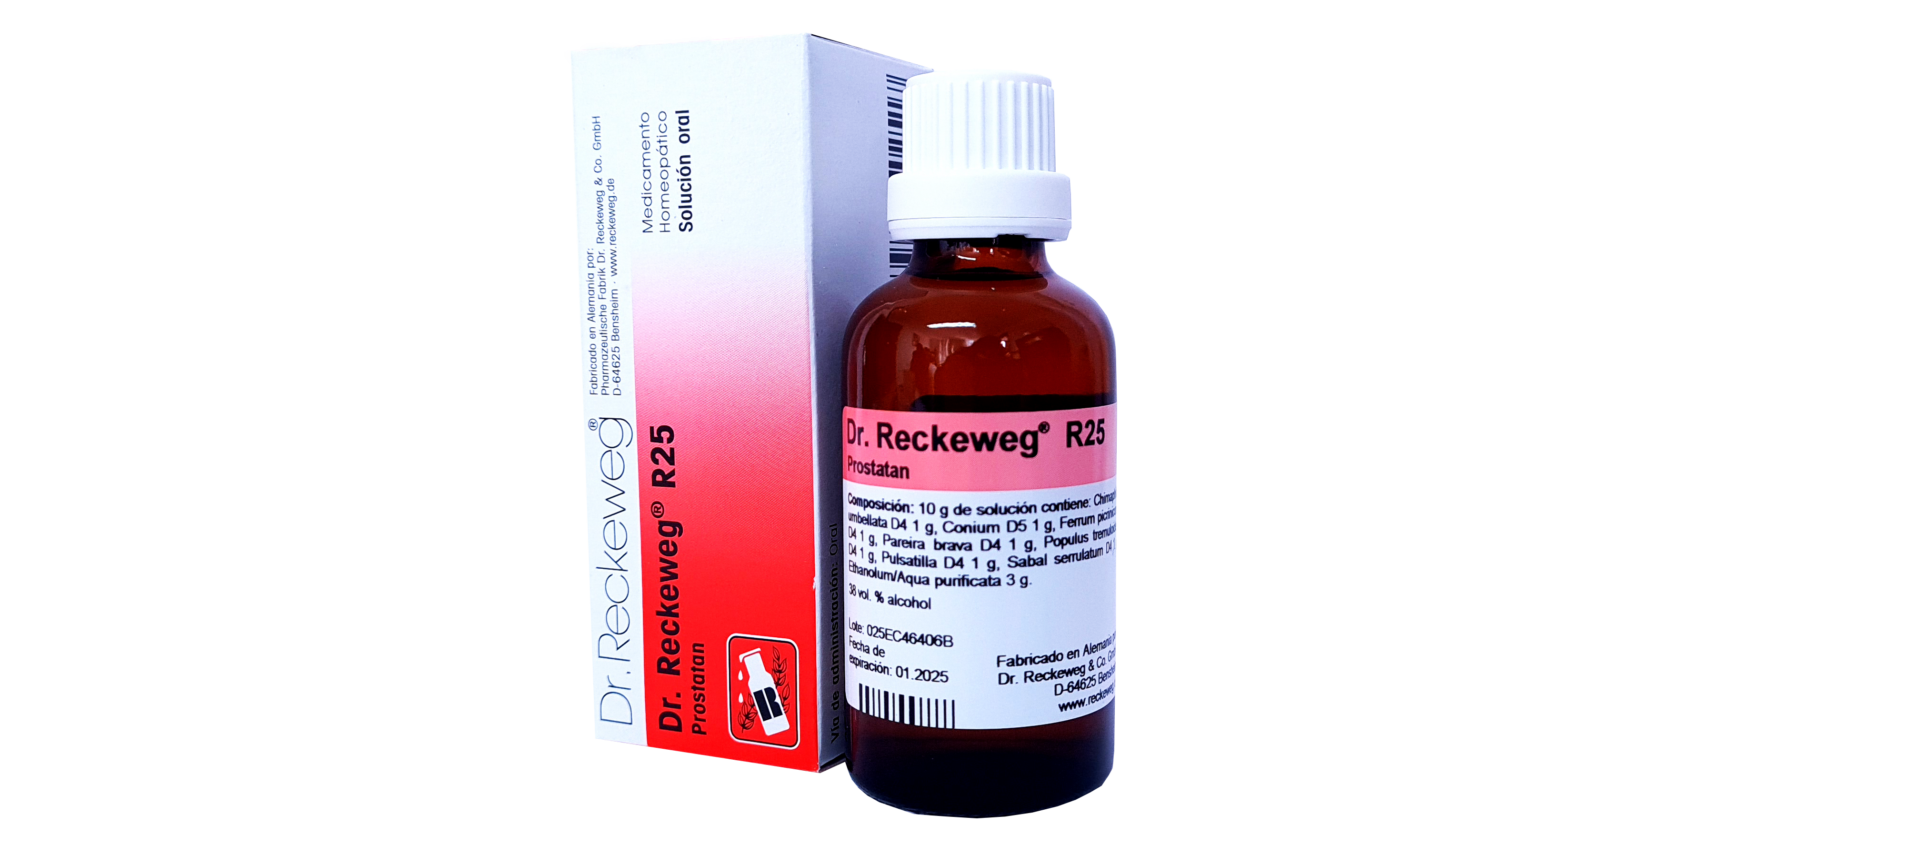 MEDICAMENTOS R3 CORVOSAN X 50 ML (Dr. Reckeweg) CARDIOVASCULAR Y CIRCULACION